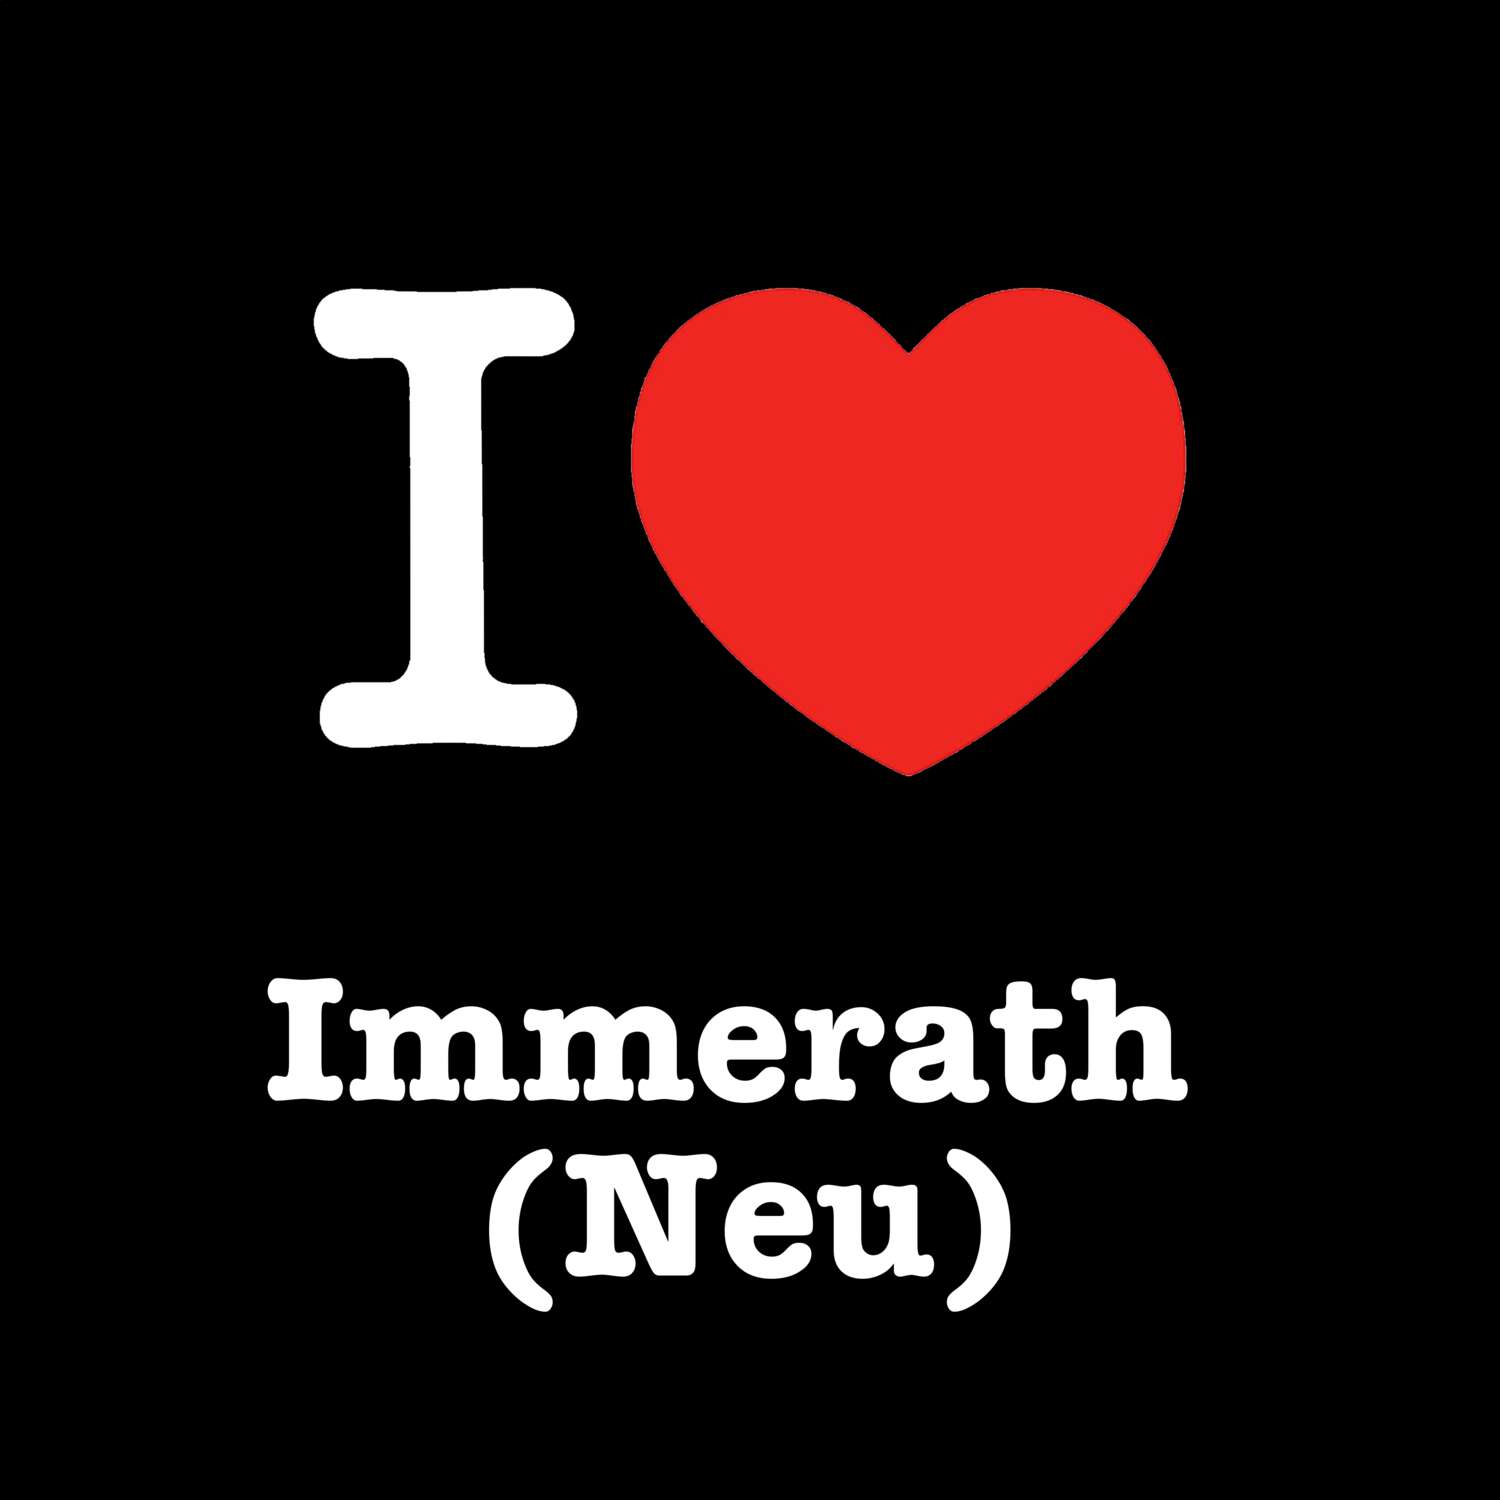 Immerath (Neu) T-Shirt »I love«